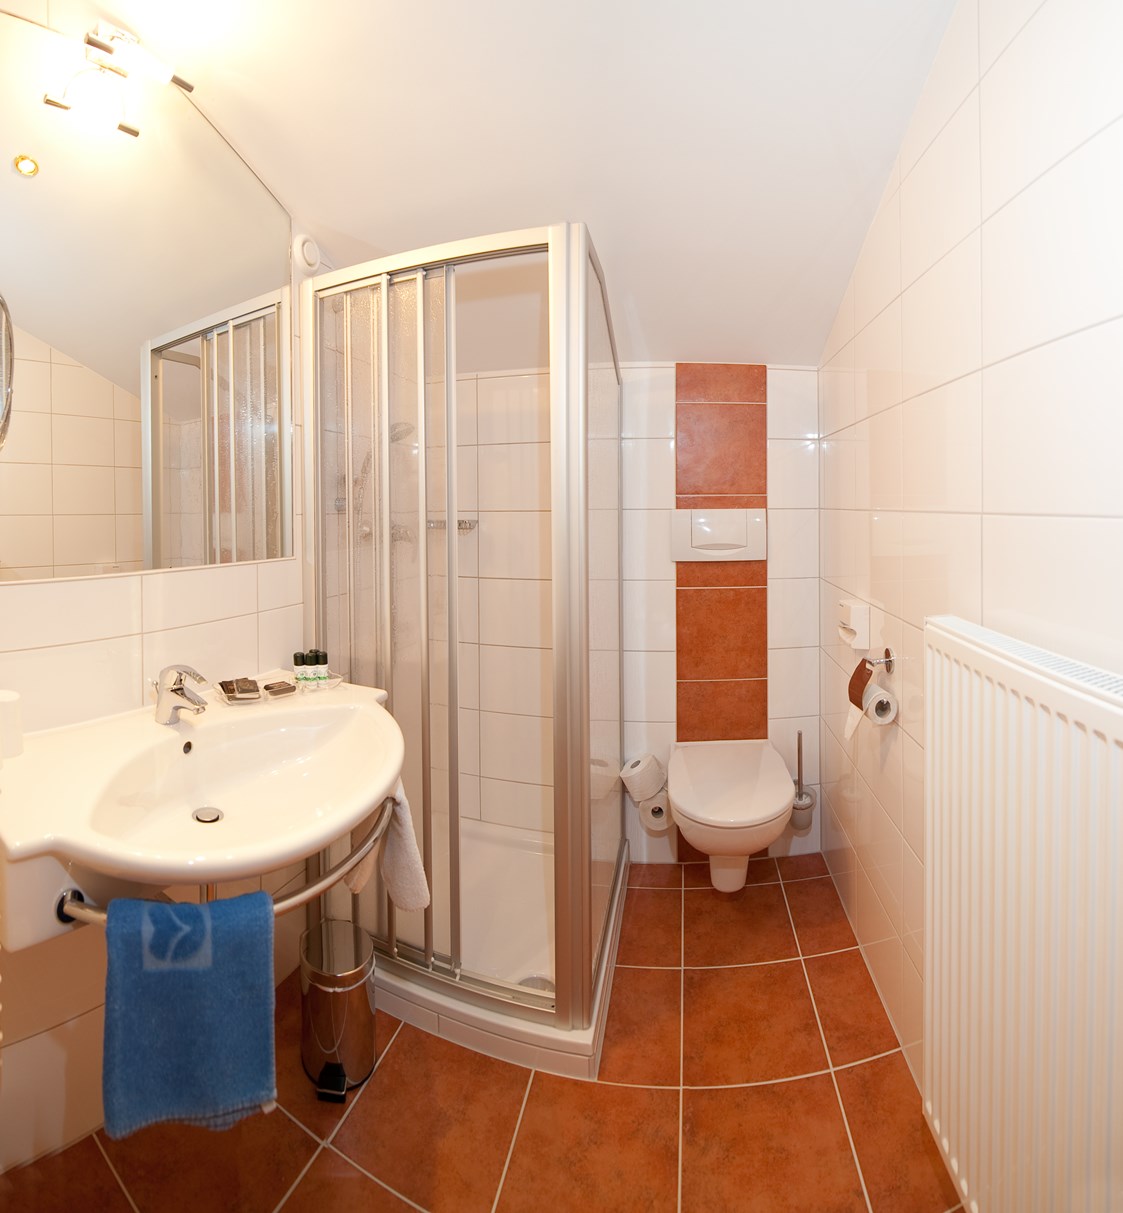 Skihotel: Badezimmer Doppelzimmer "Zirbe" - Hotel Berghof